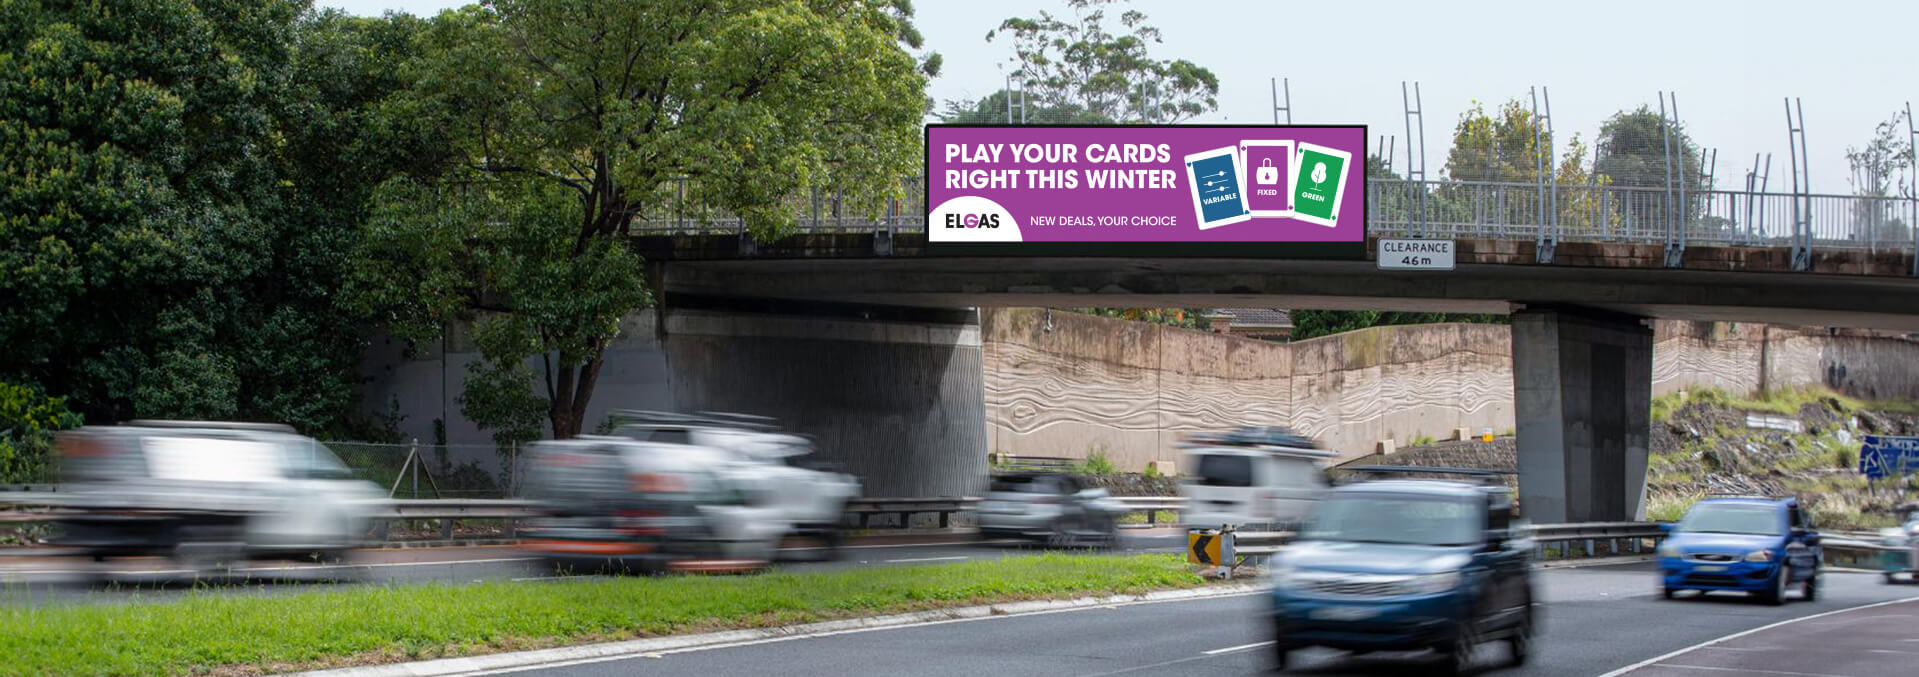 Elgas billboard above freeway, designed by MOO Marketing & Design graphic design agency in Melbourne